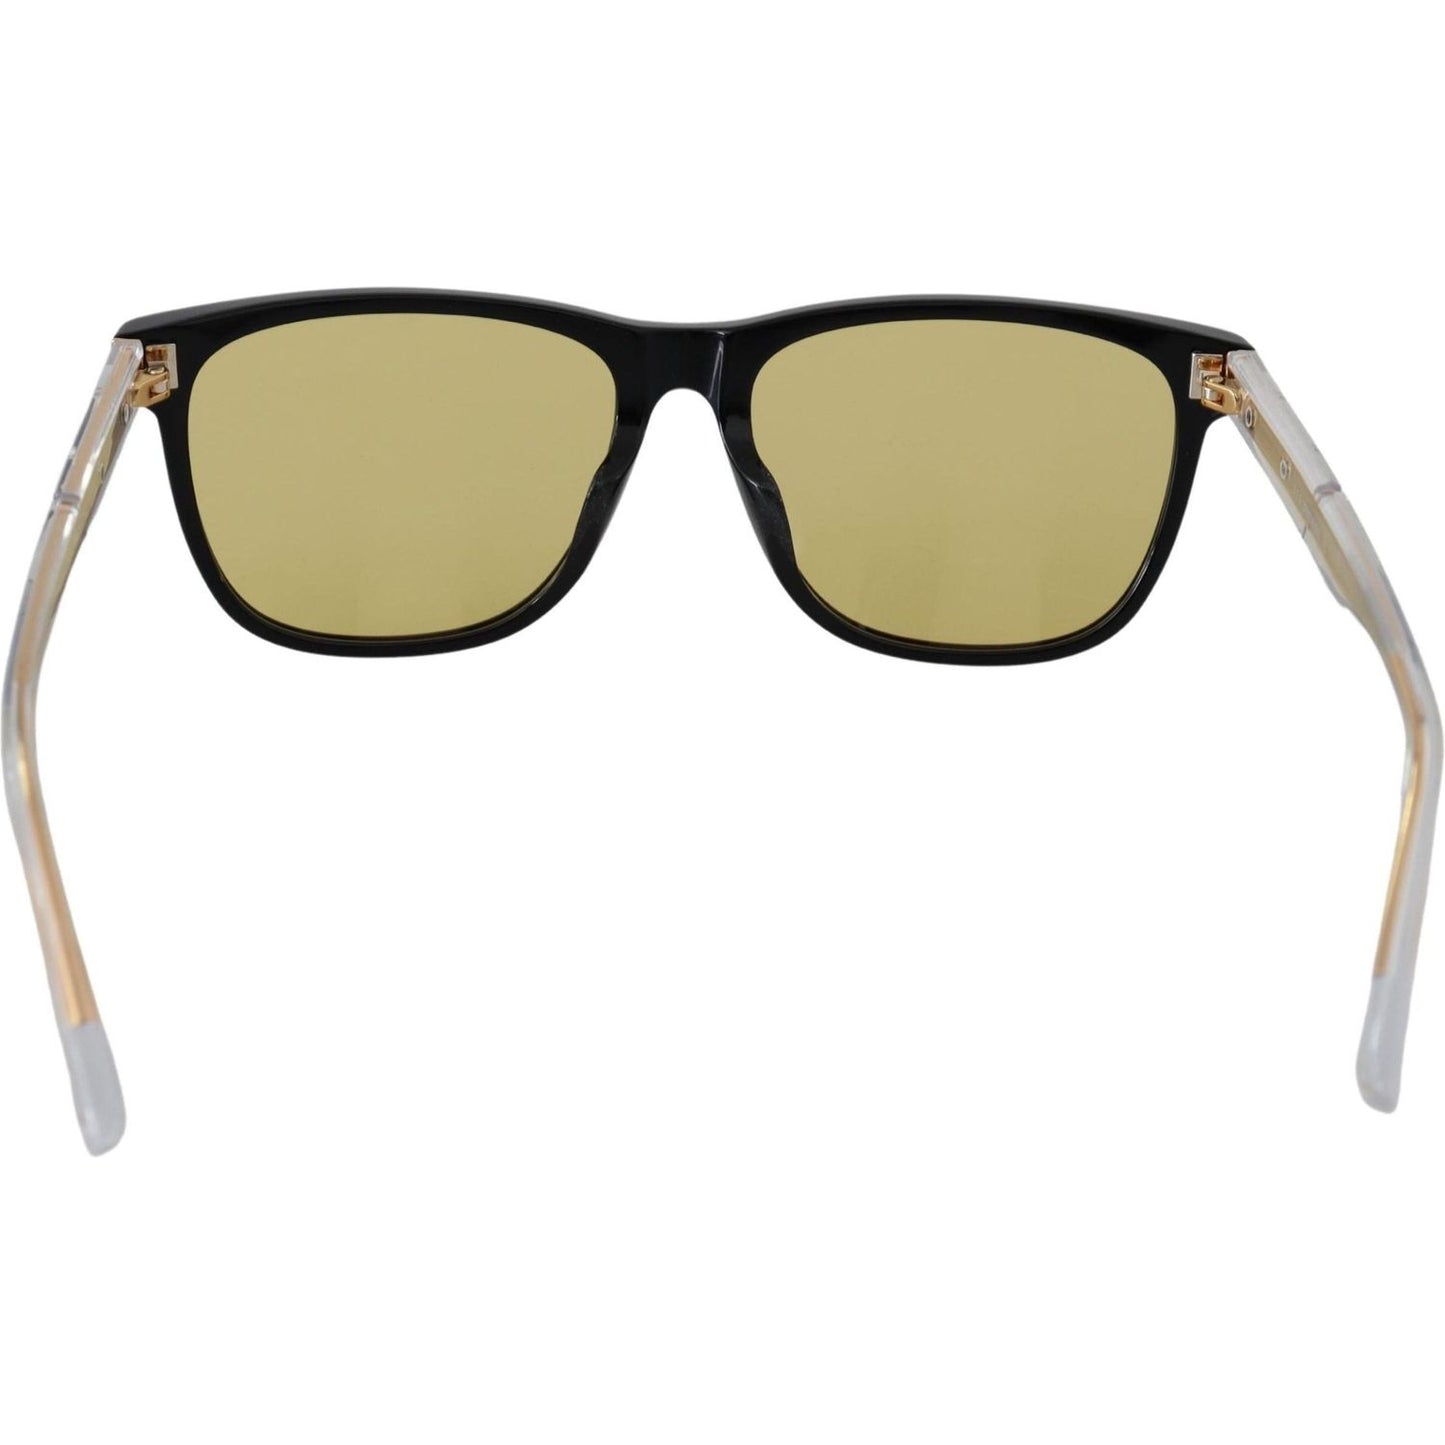 Diesel Chic Black Acetate Sunglasses with Yellow Lenses black-frame-dl0330-d-01e-57-yellow-transparent-lenses-sunglasses